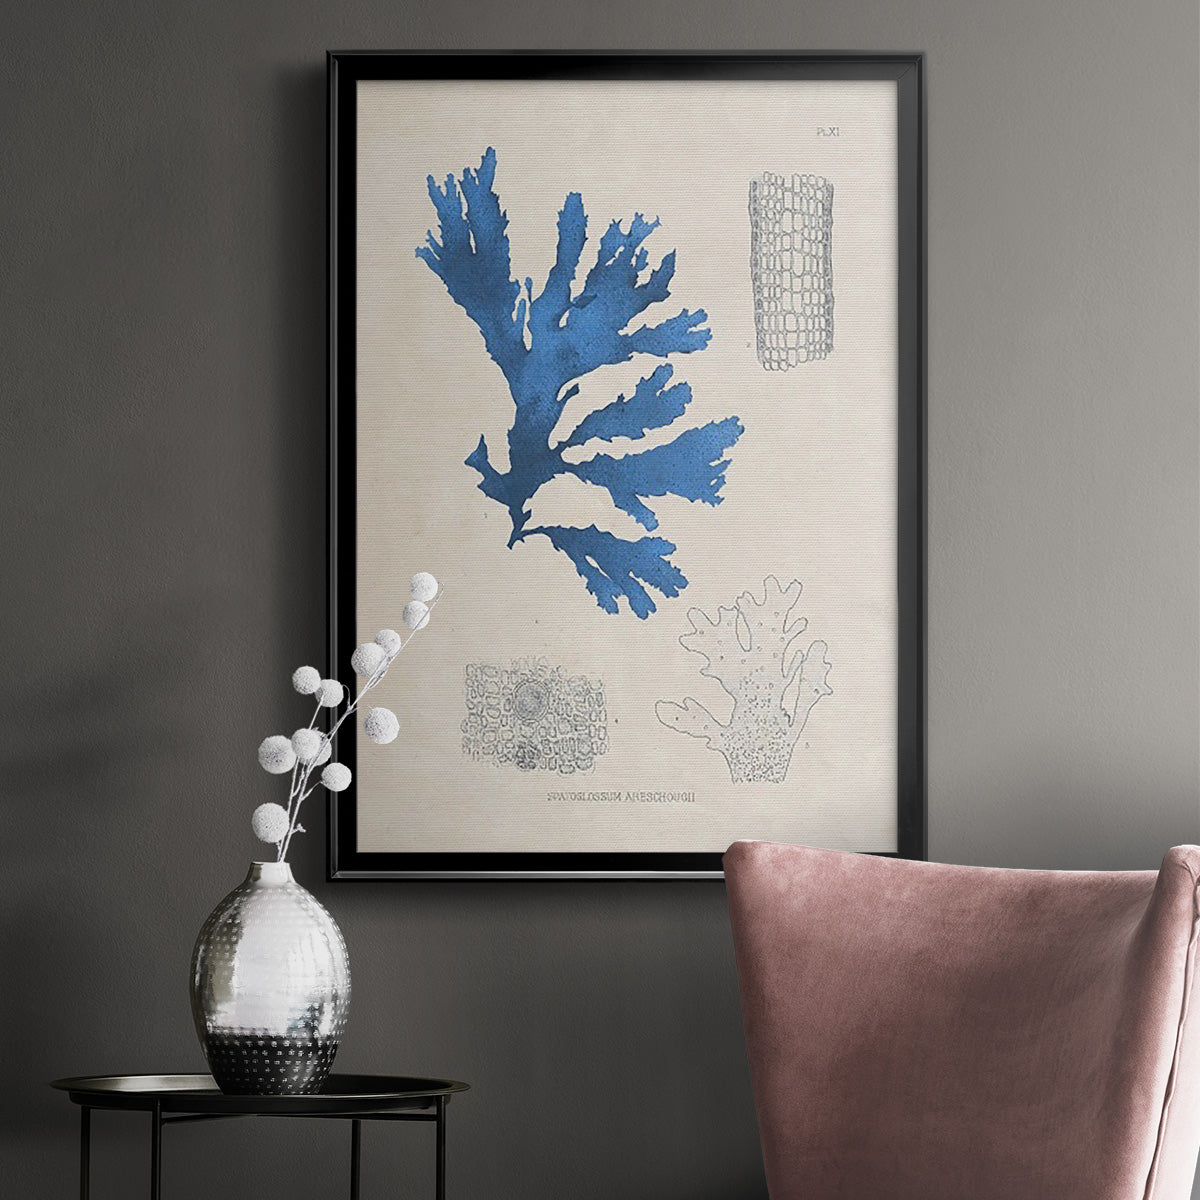 Blue Marine Algae VIII Premium Framed Print - Ready to Hang